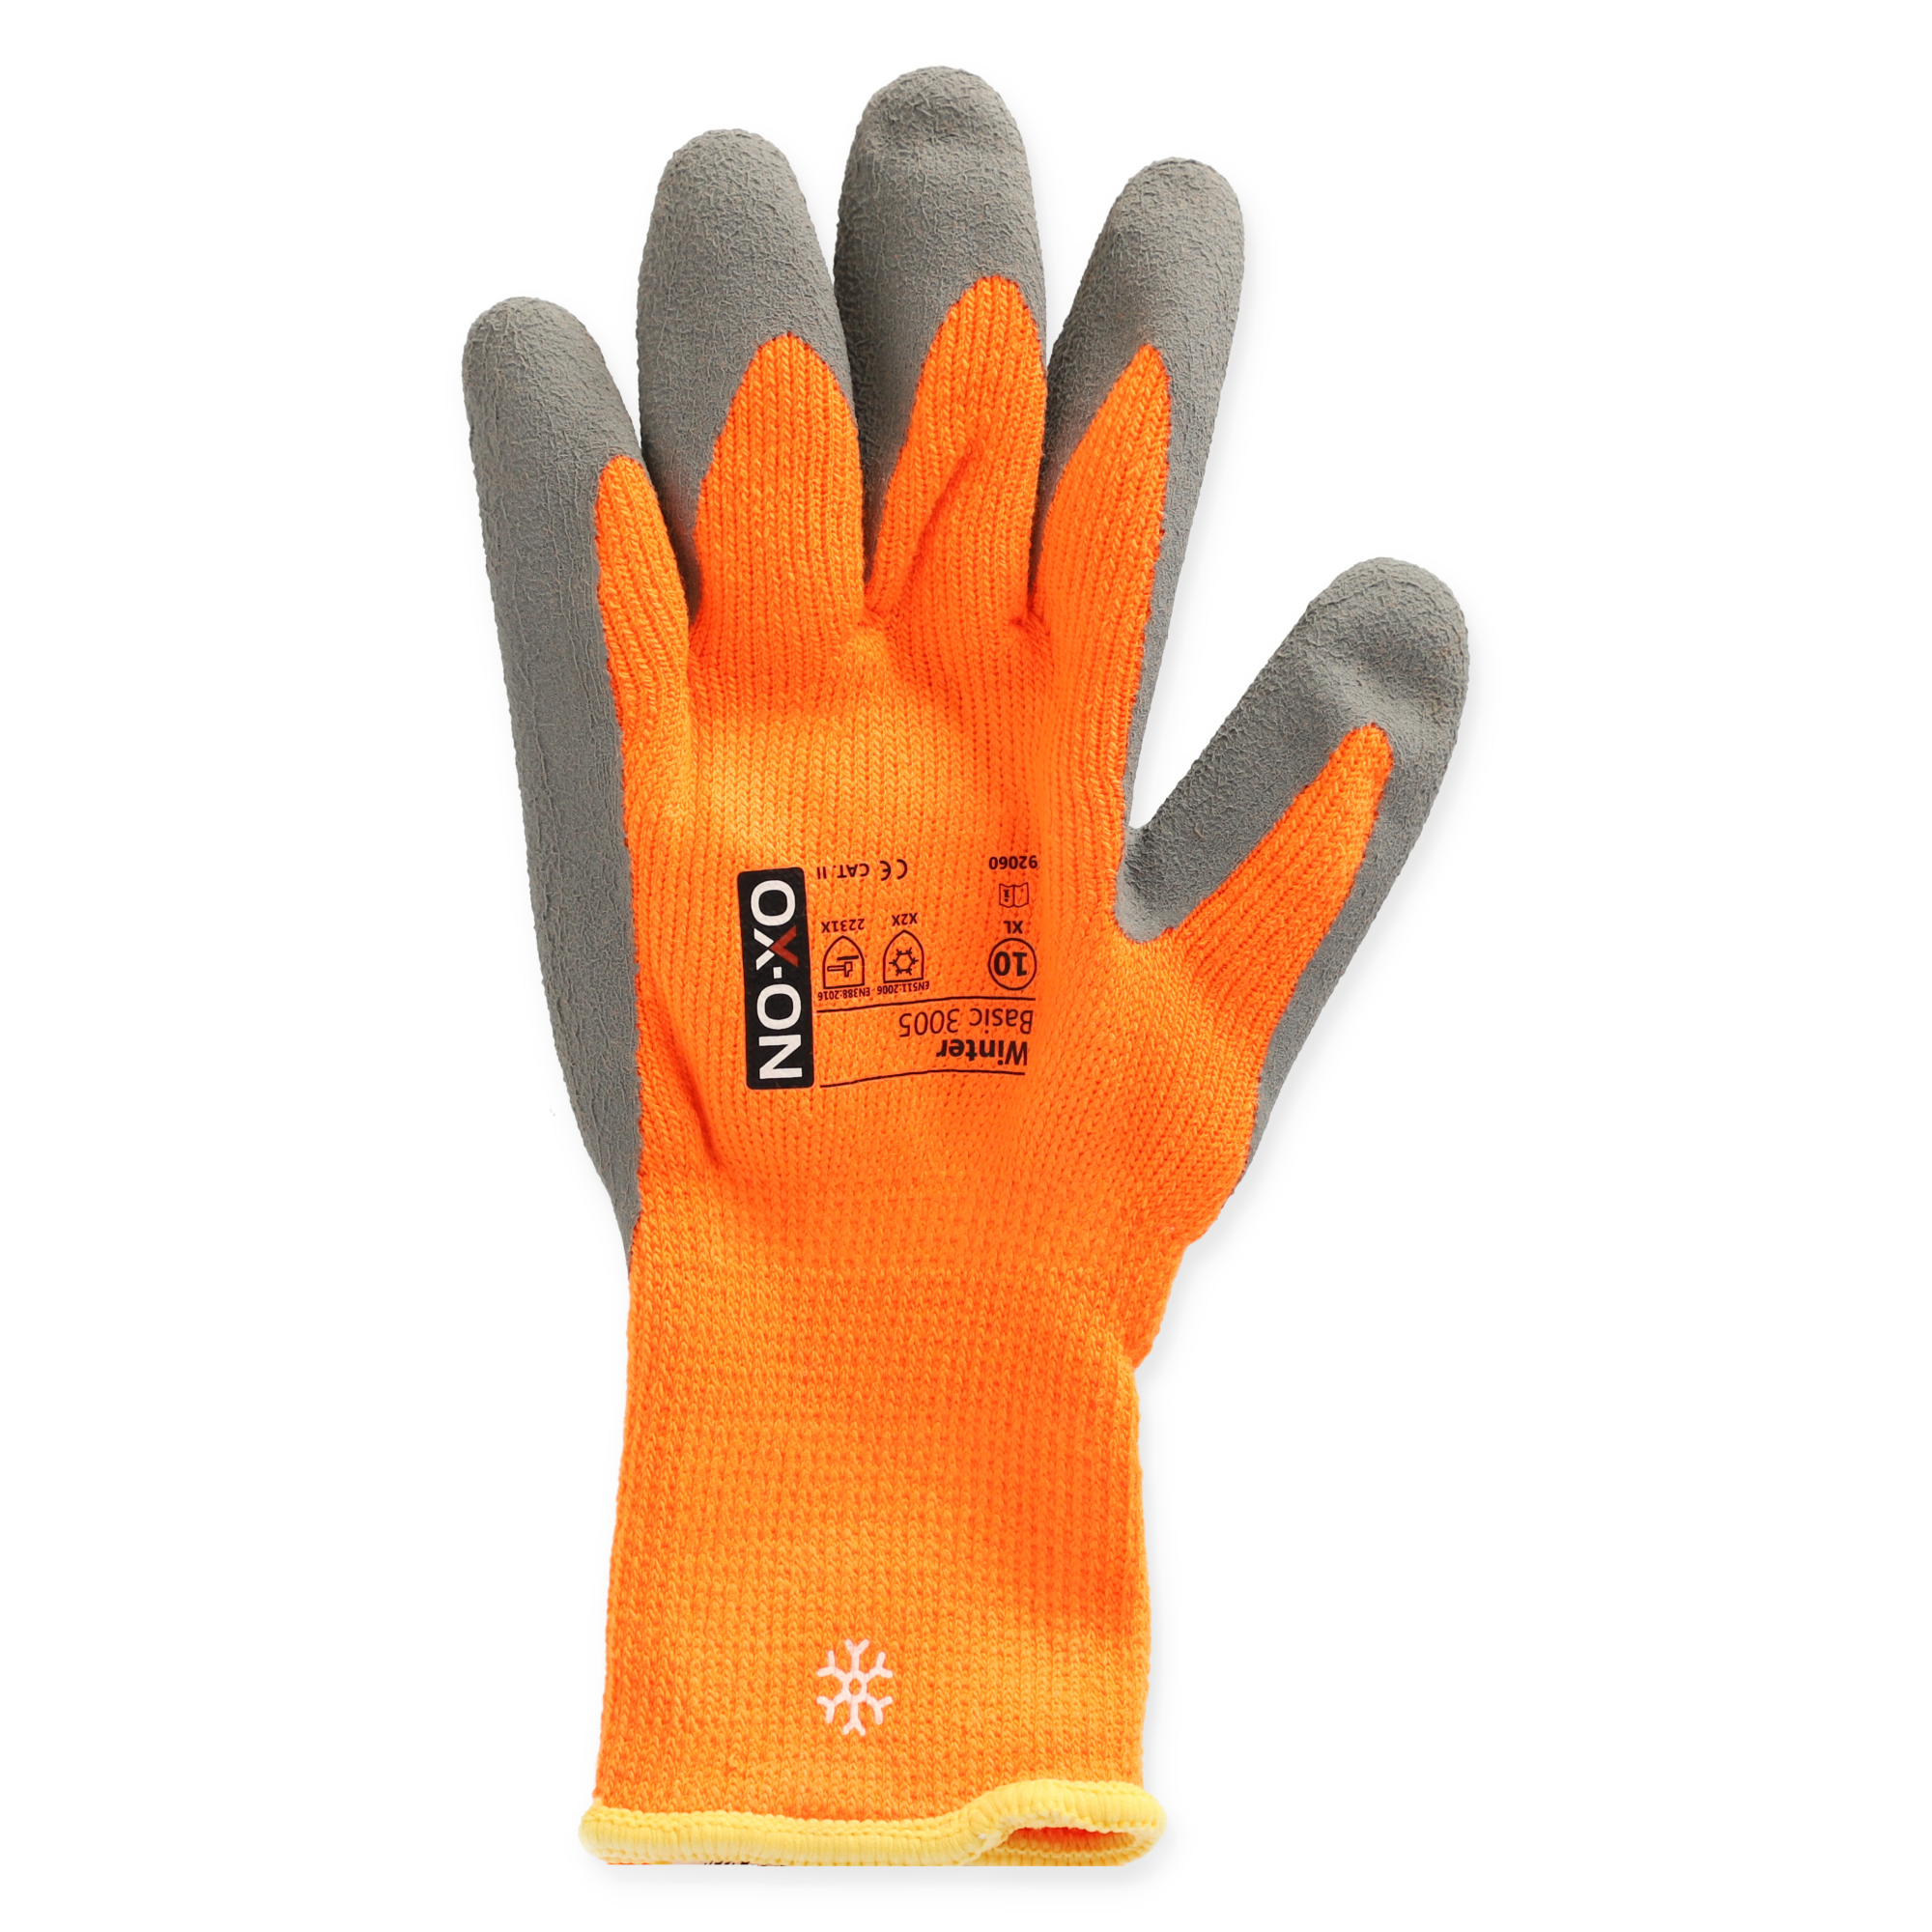 Handschuhe 'Basic 3005' orange Gr. 11 + product picture